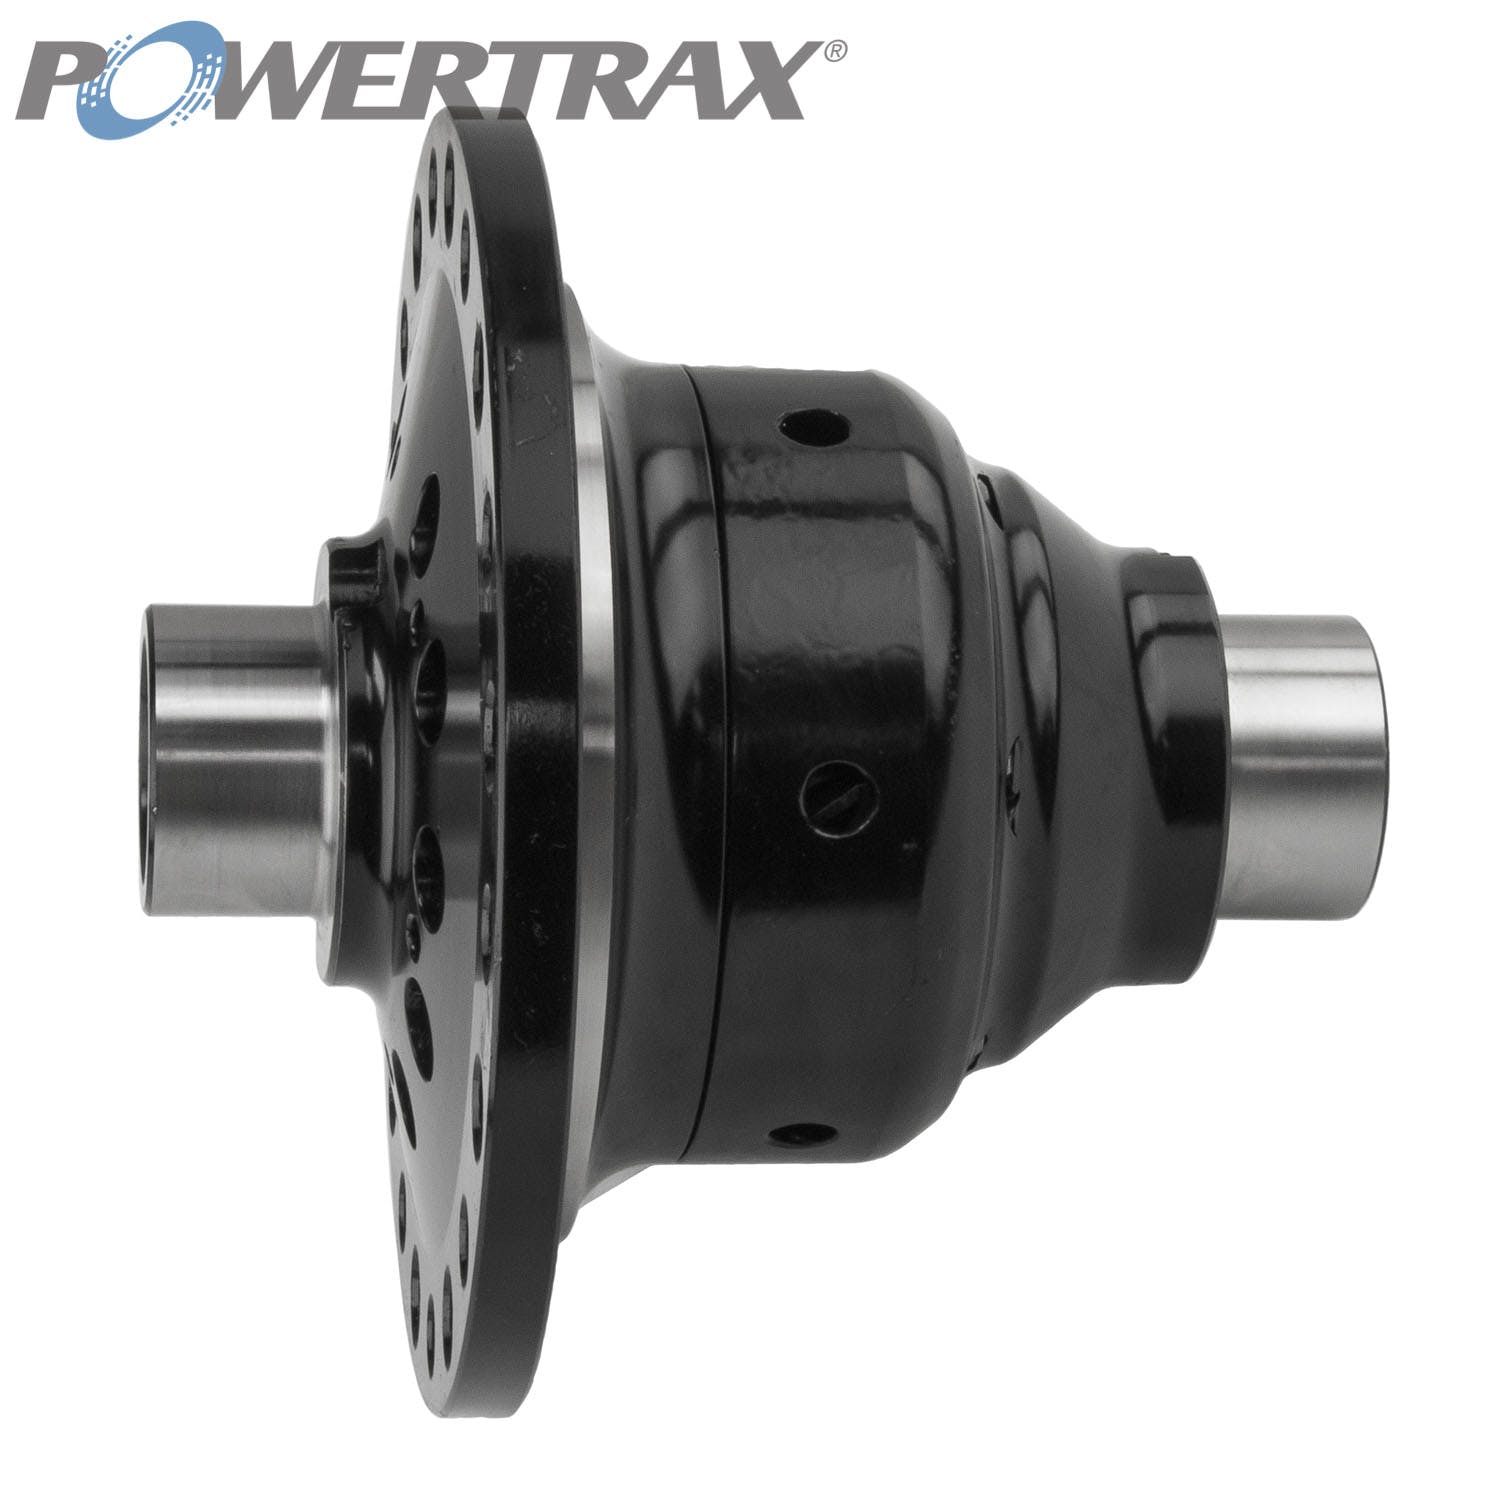 PowerTrax GT434430JK Powertrax - Grip PRO Traction System